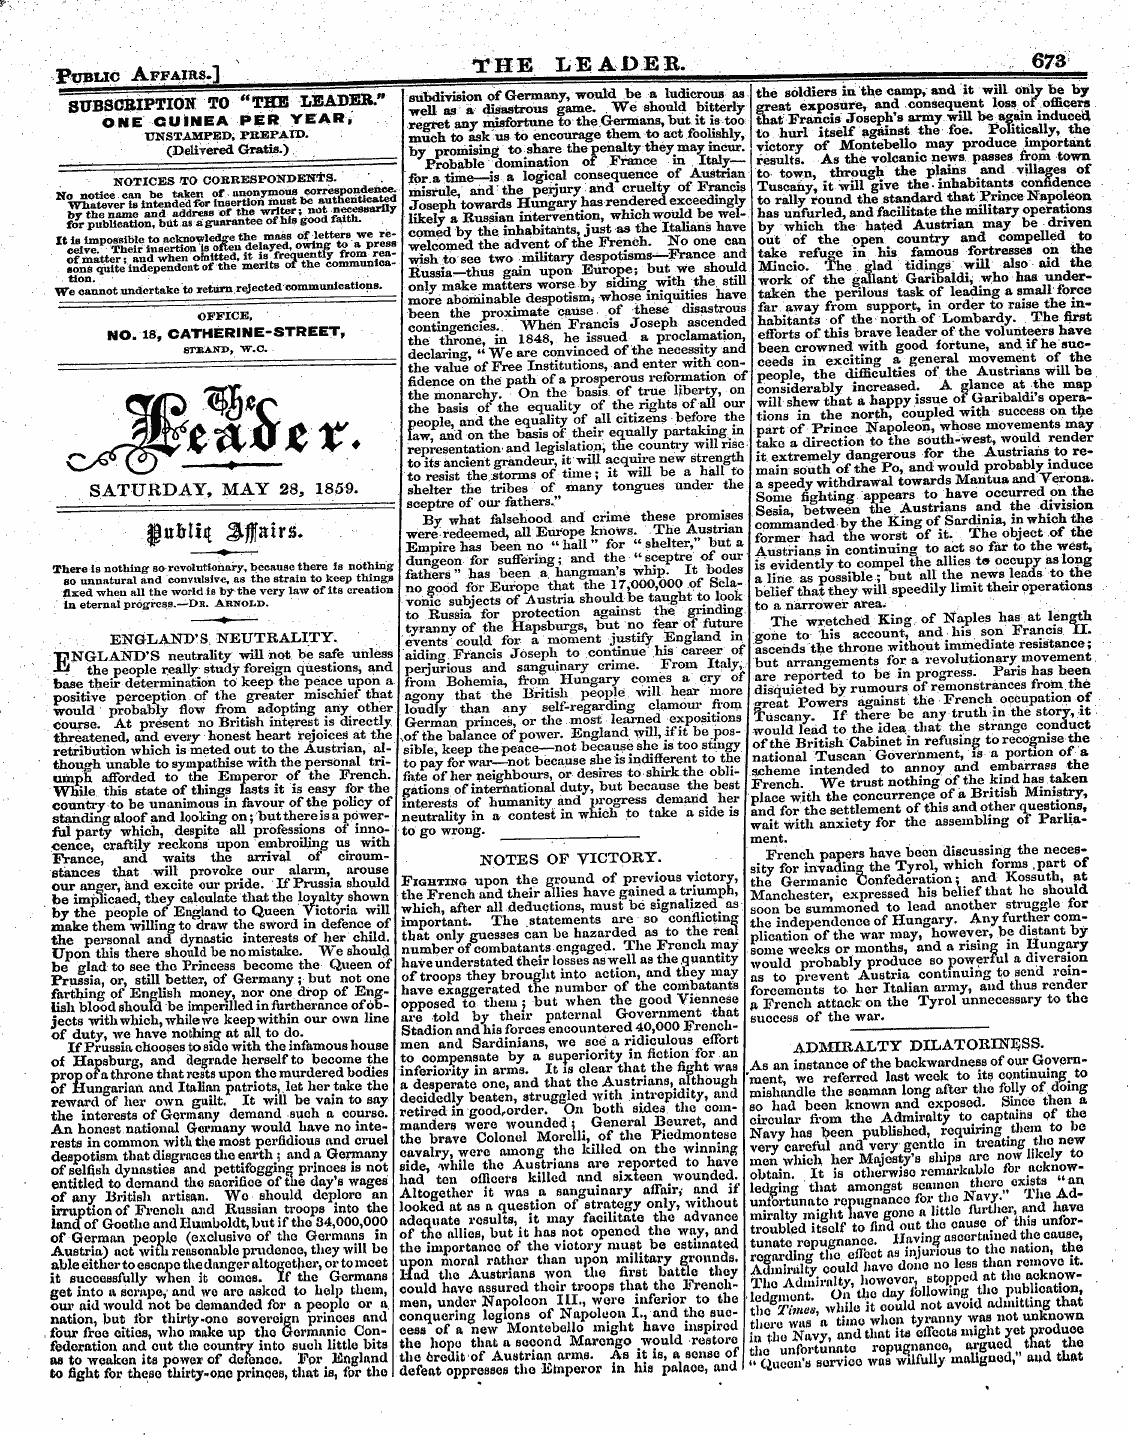 Leader (1850-1860): jS F Y, 2nd edition - Saturday, May 28, 1859.